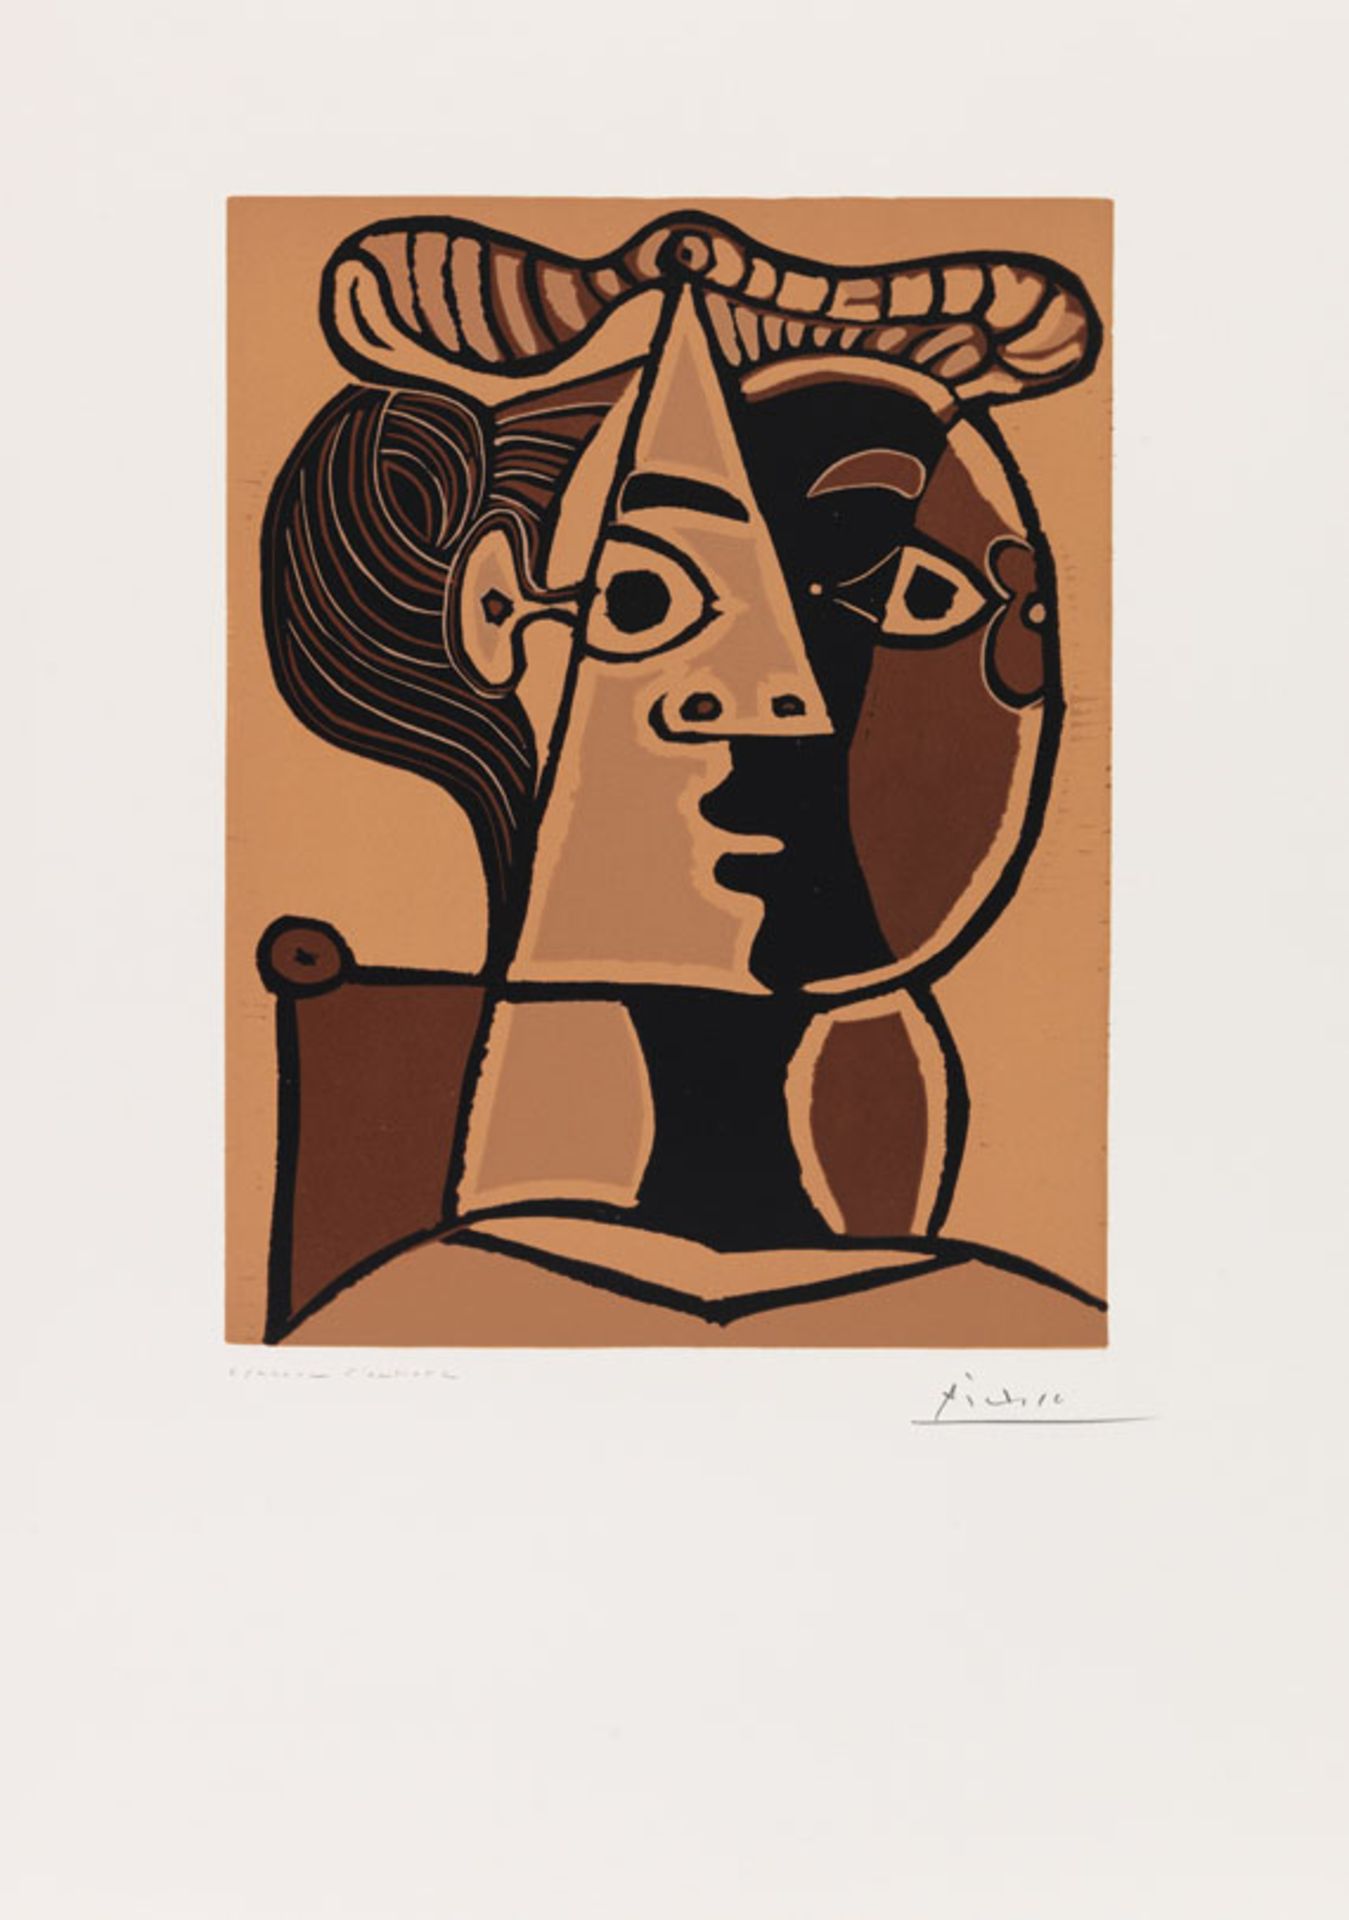 Pablo Picasso 1881 Malaga - 1973 Mougins Femme assise au chignon. 1962. Farblinolschnitt in vier